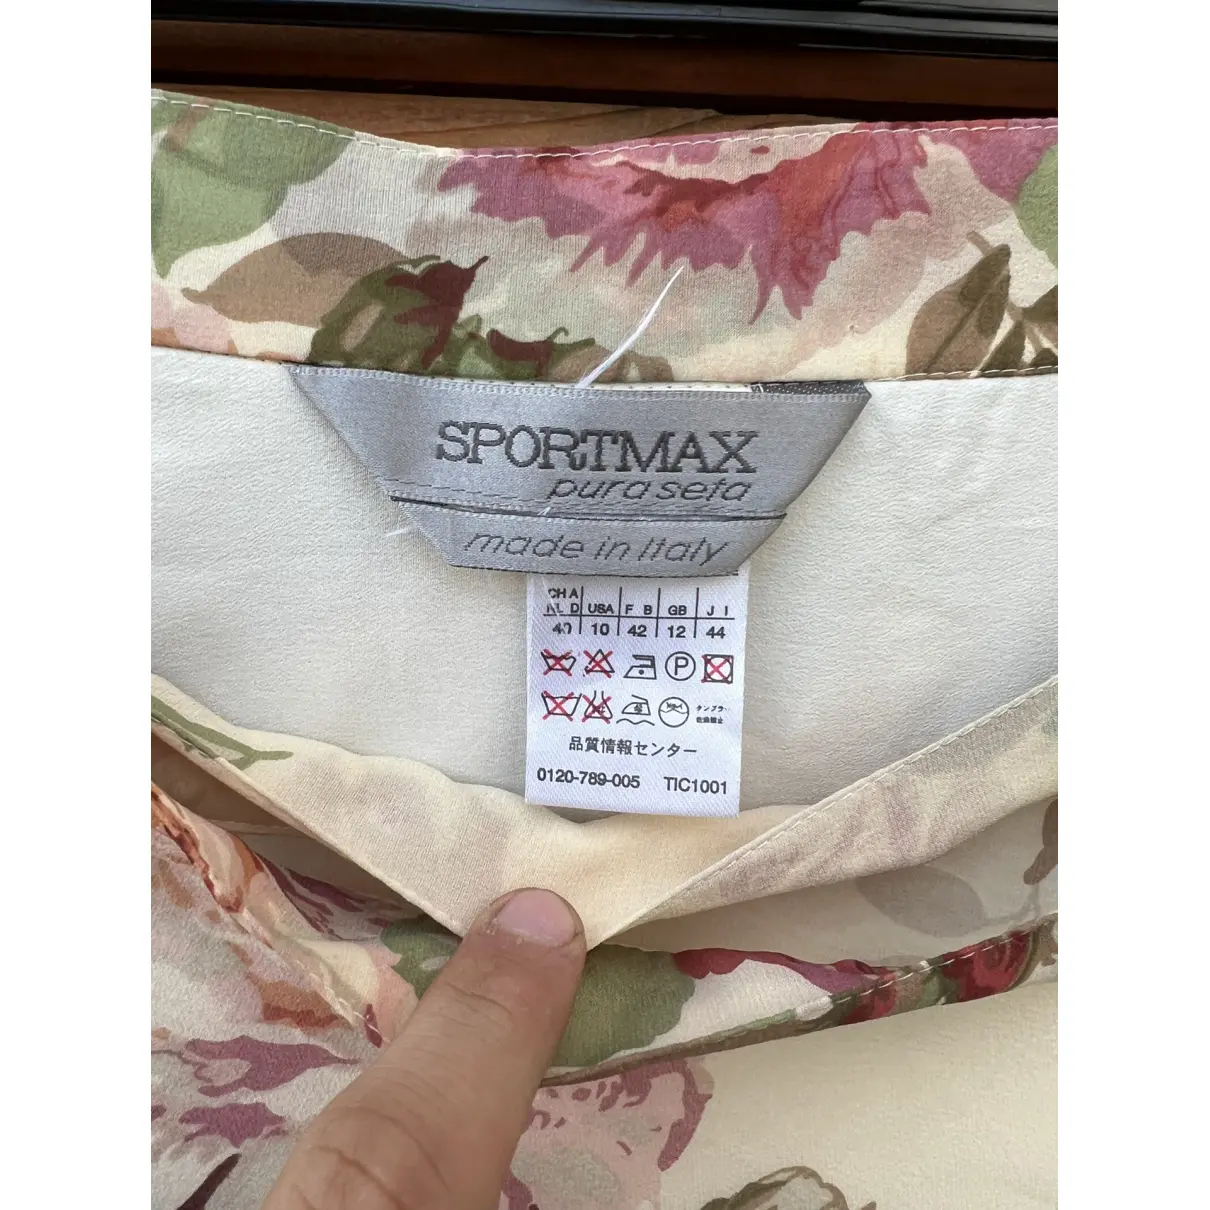 Buy Sportmax Silk maxi skirt online